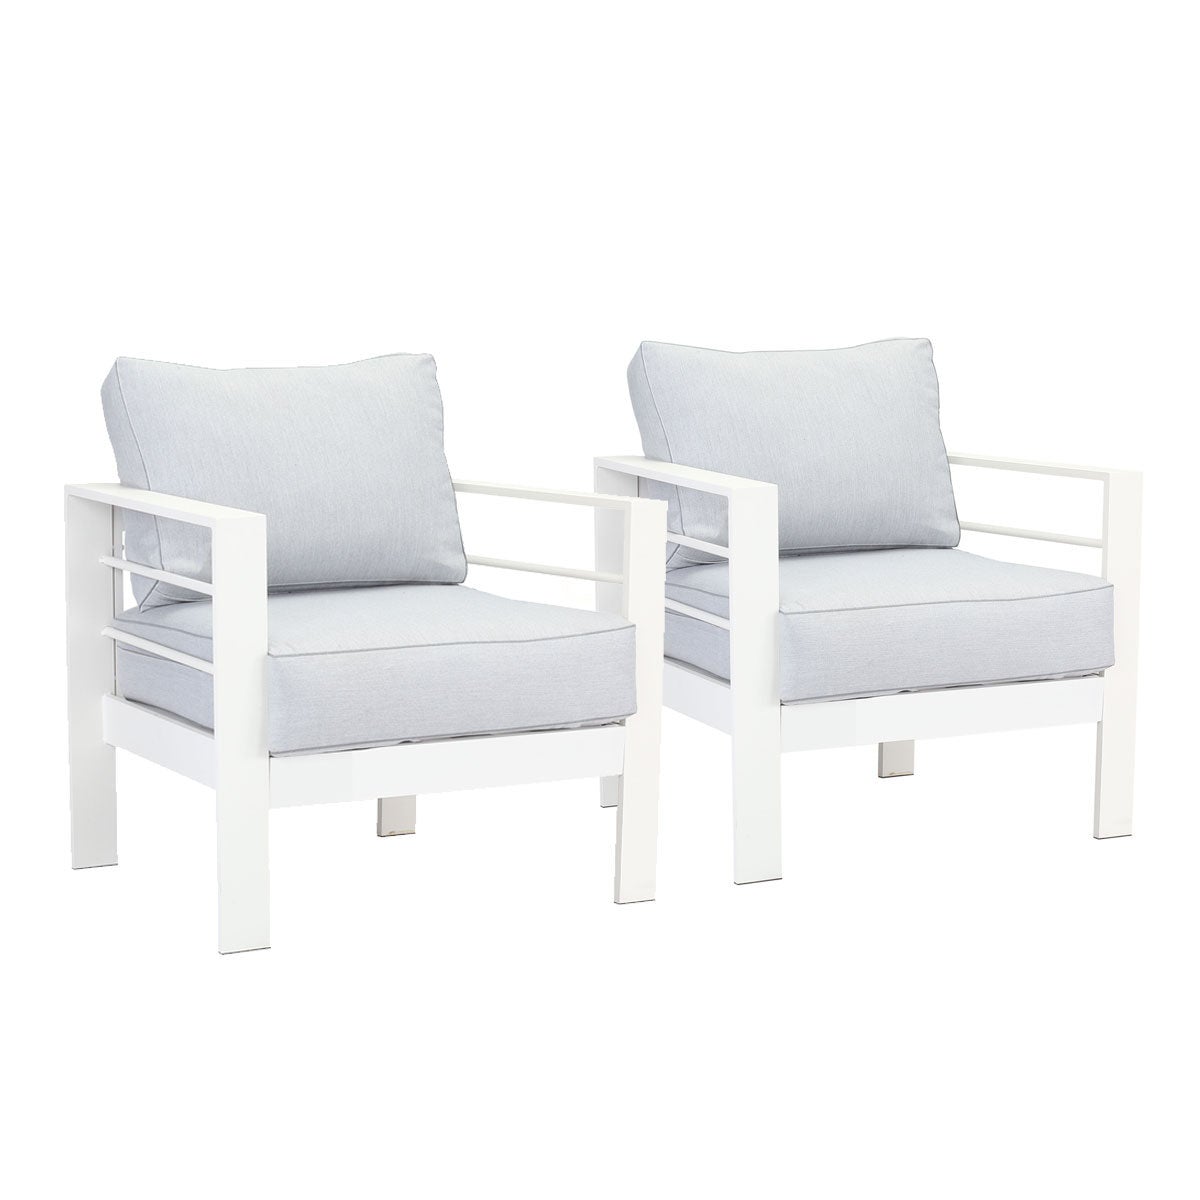 Paris Single Seater White Aluminium Outdoor Sofa Lounge with Arms - Light Grey Cushion (Set of 2)